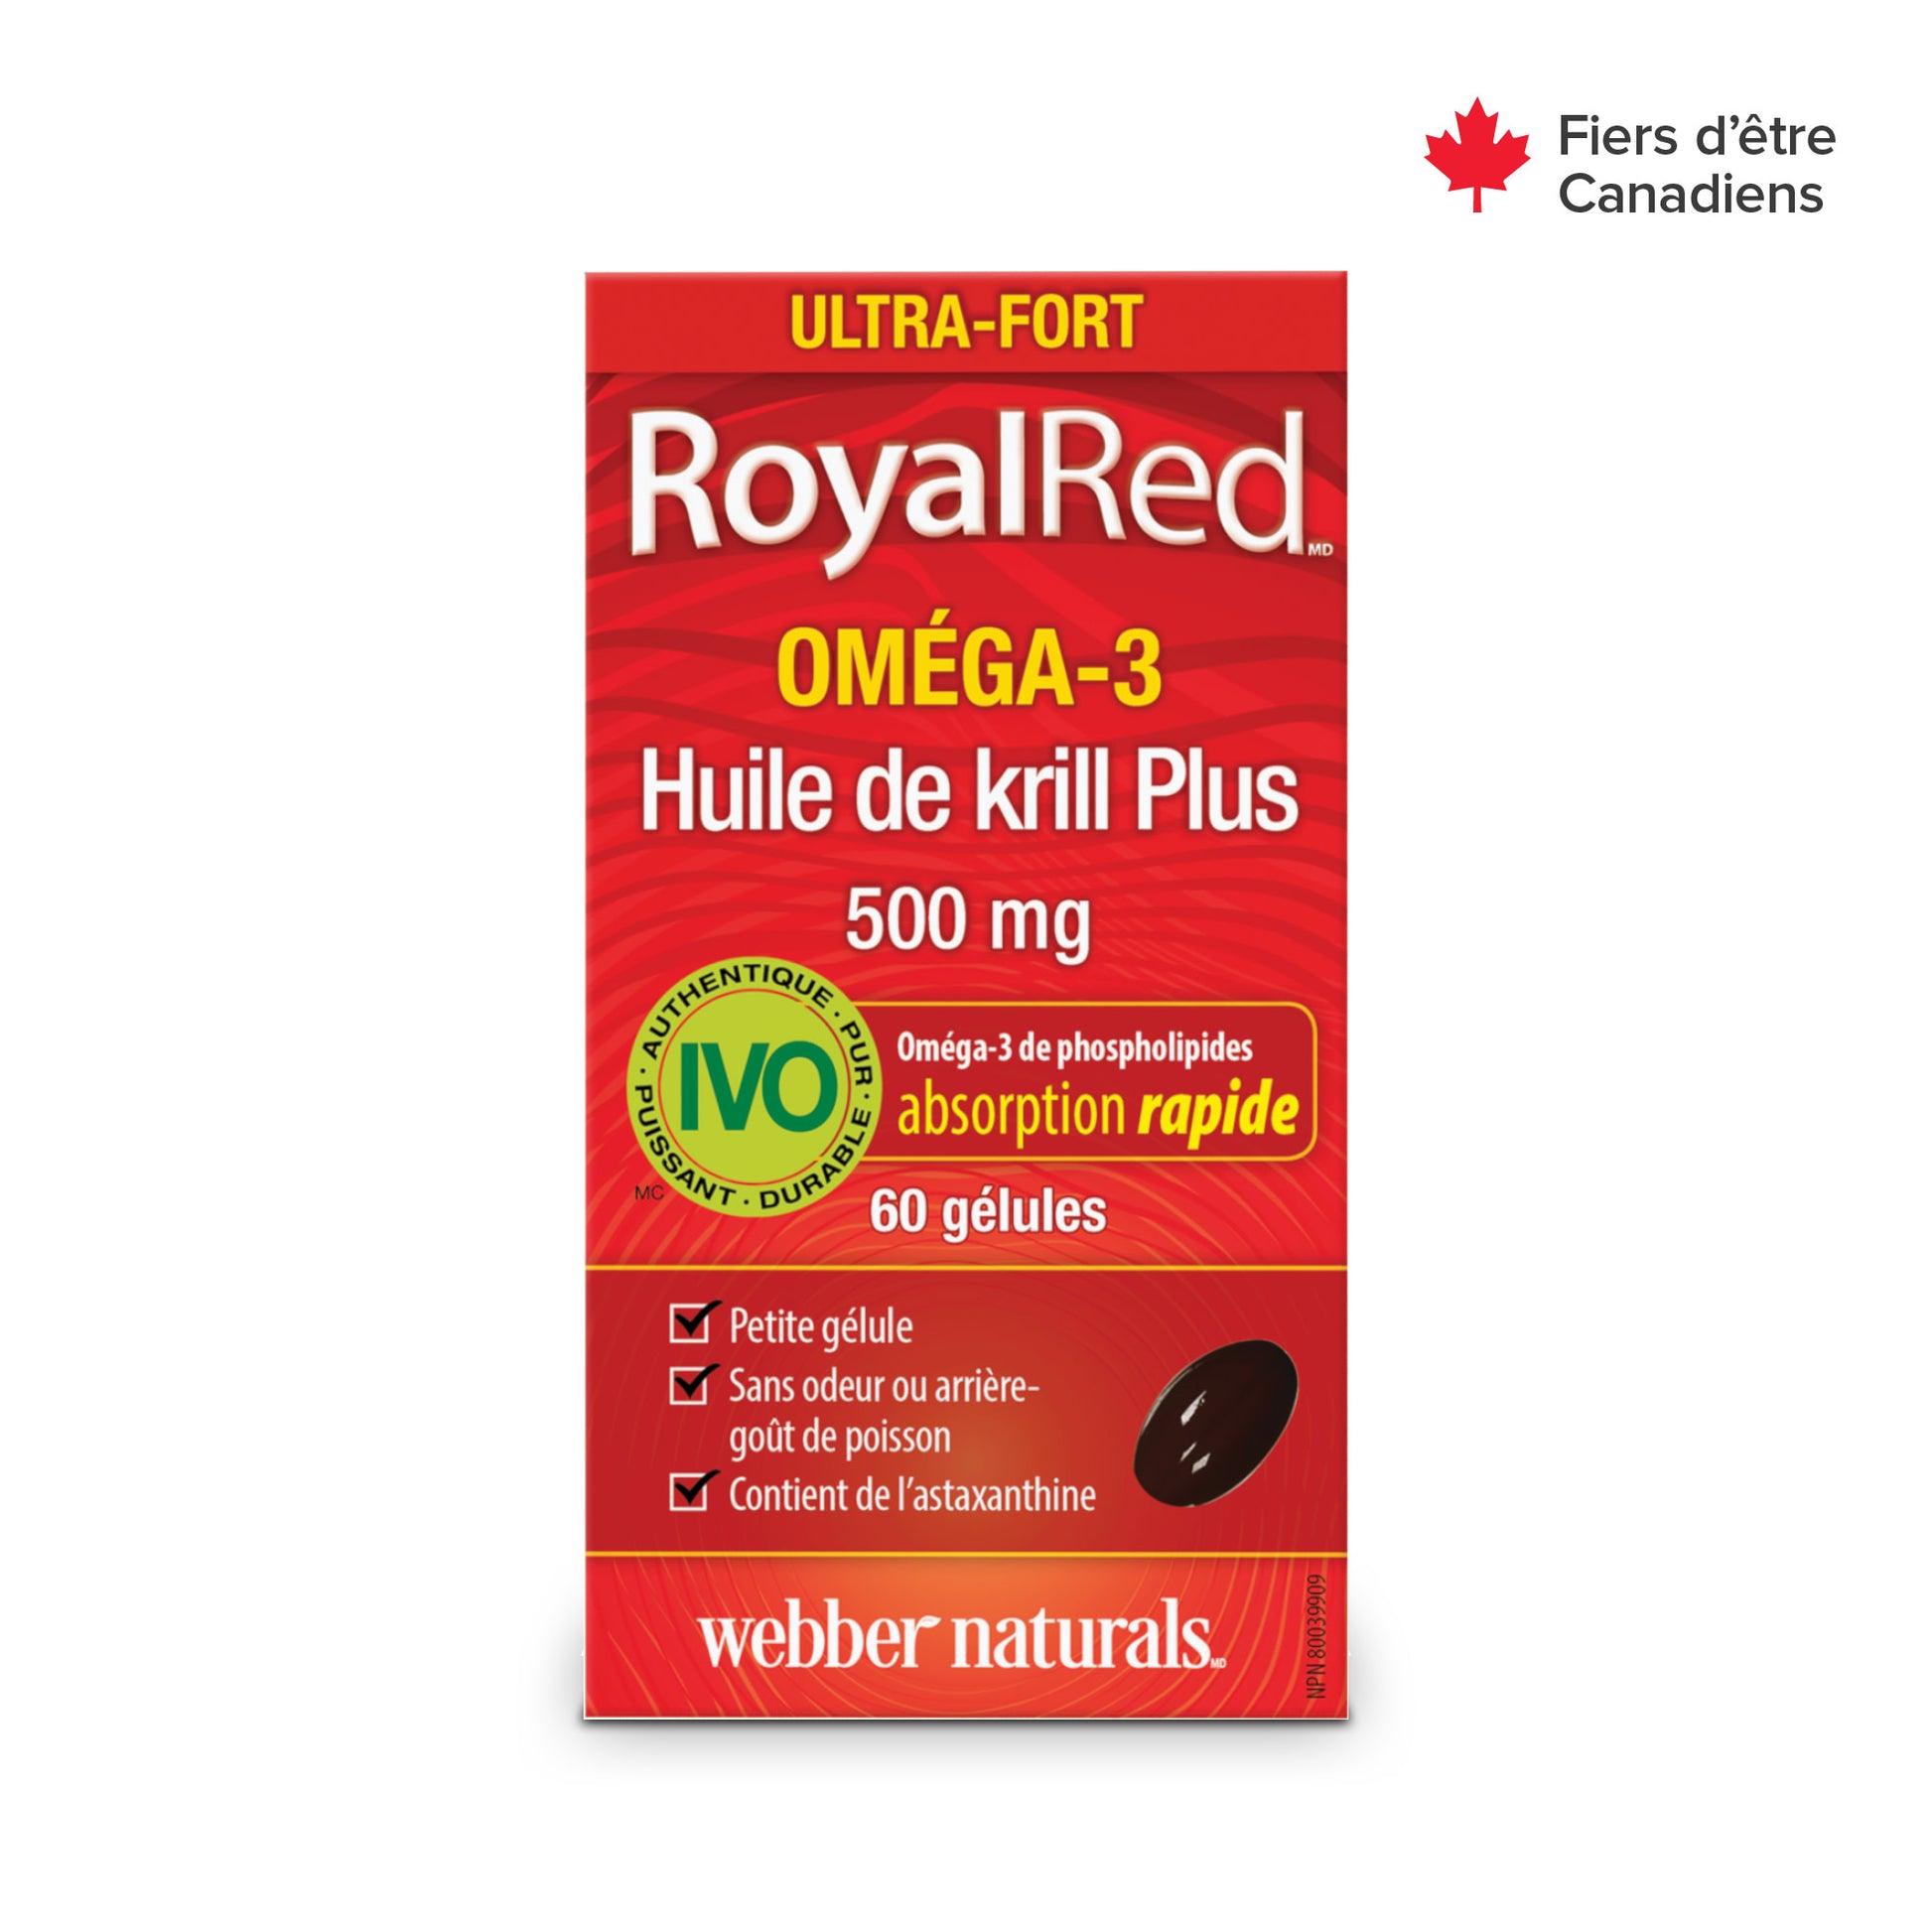 RoyalRed® Omega-3 Krill Oil Plus Extra Strength 500 mg for Webber Naturals|v|hi-res|WN3399